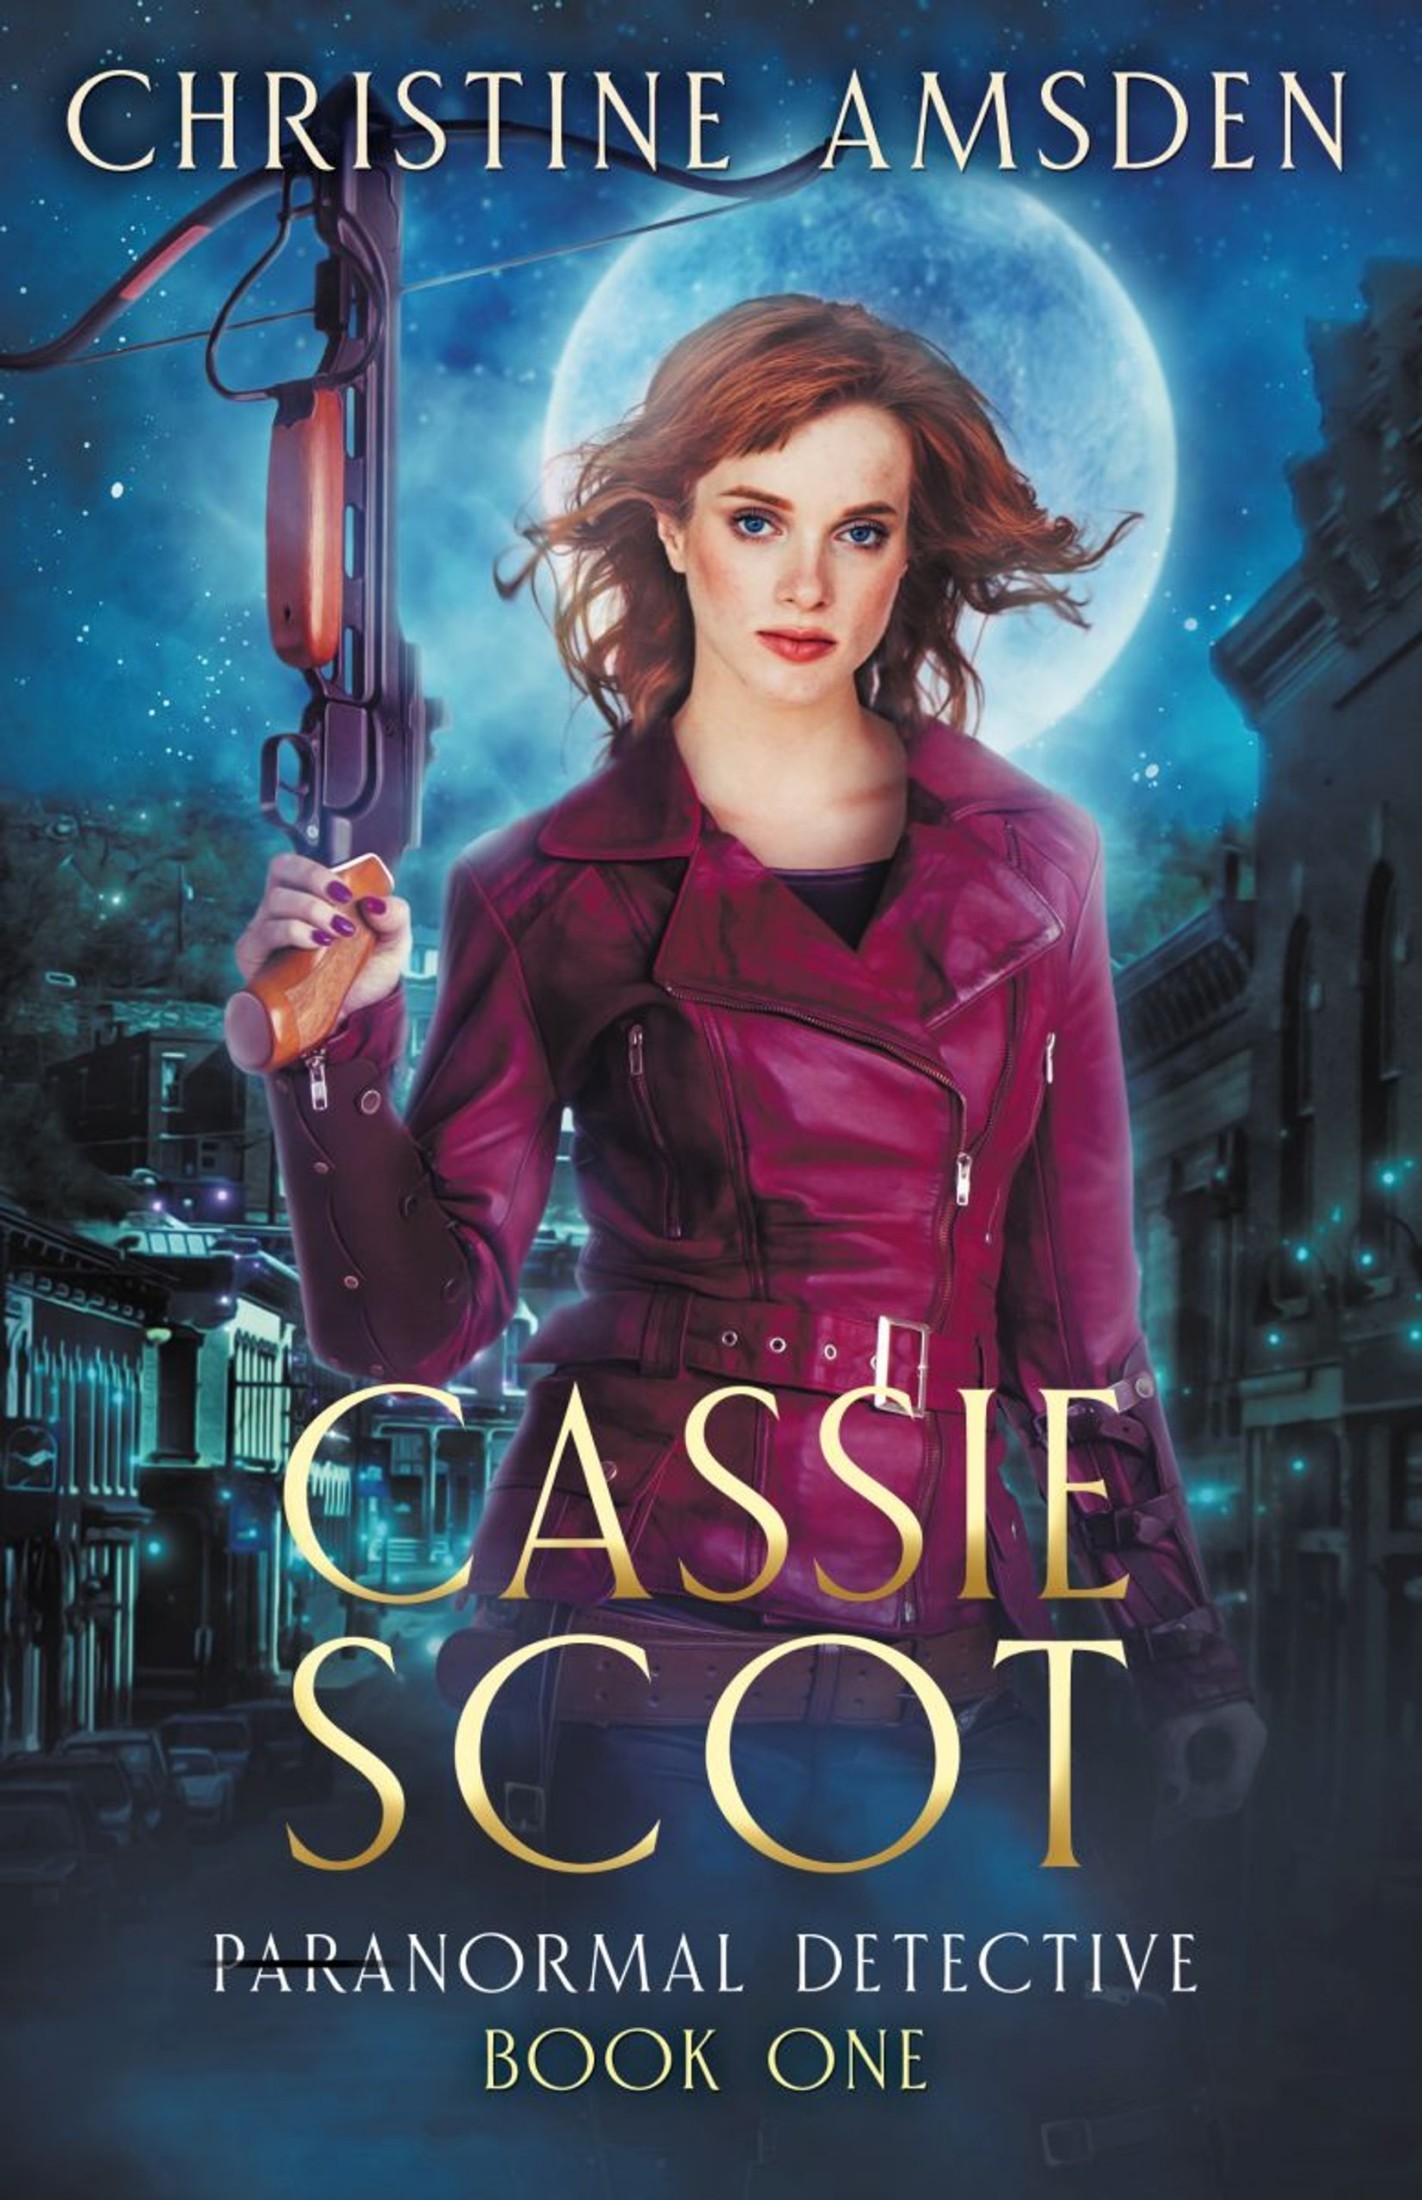 Cassie Scot: ParaNormal Detective